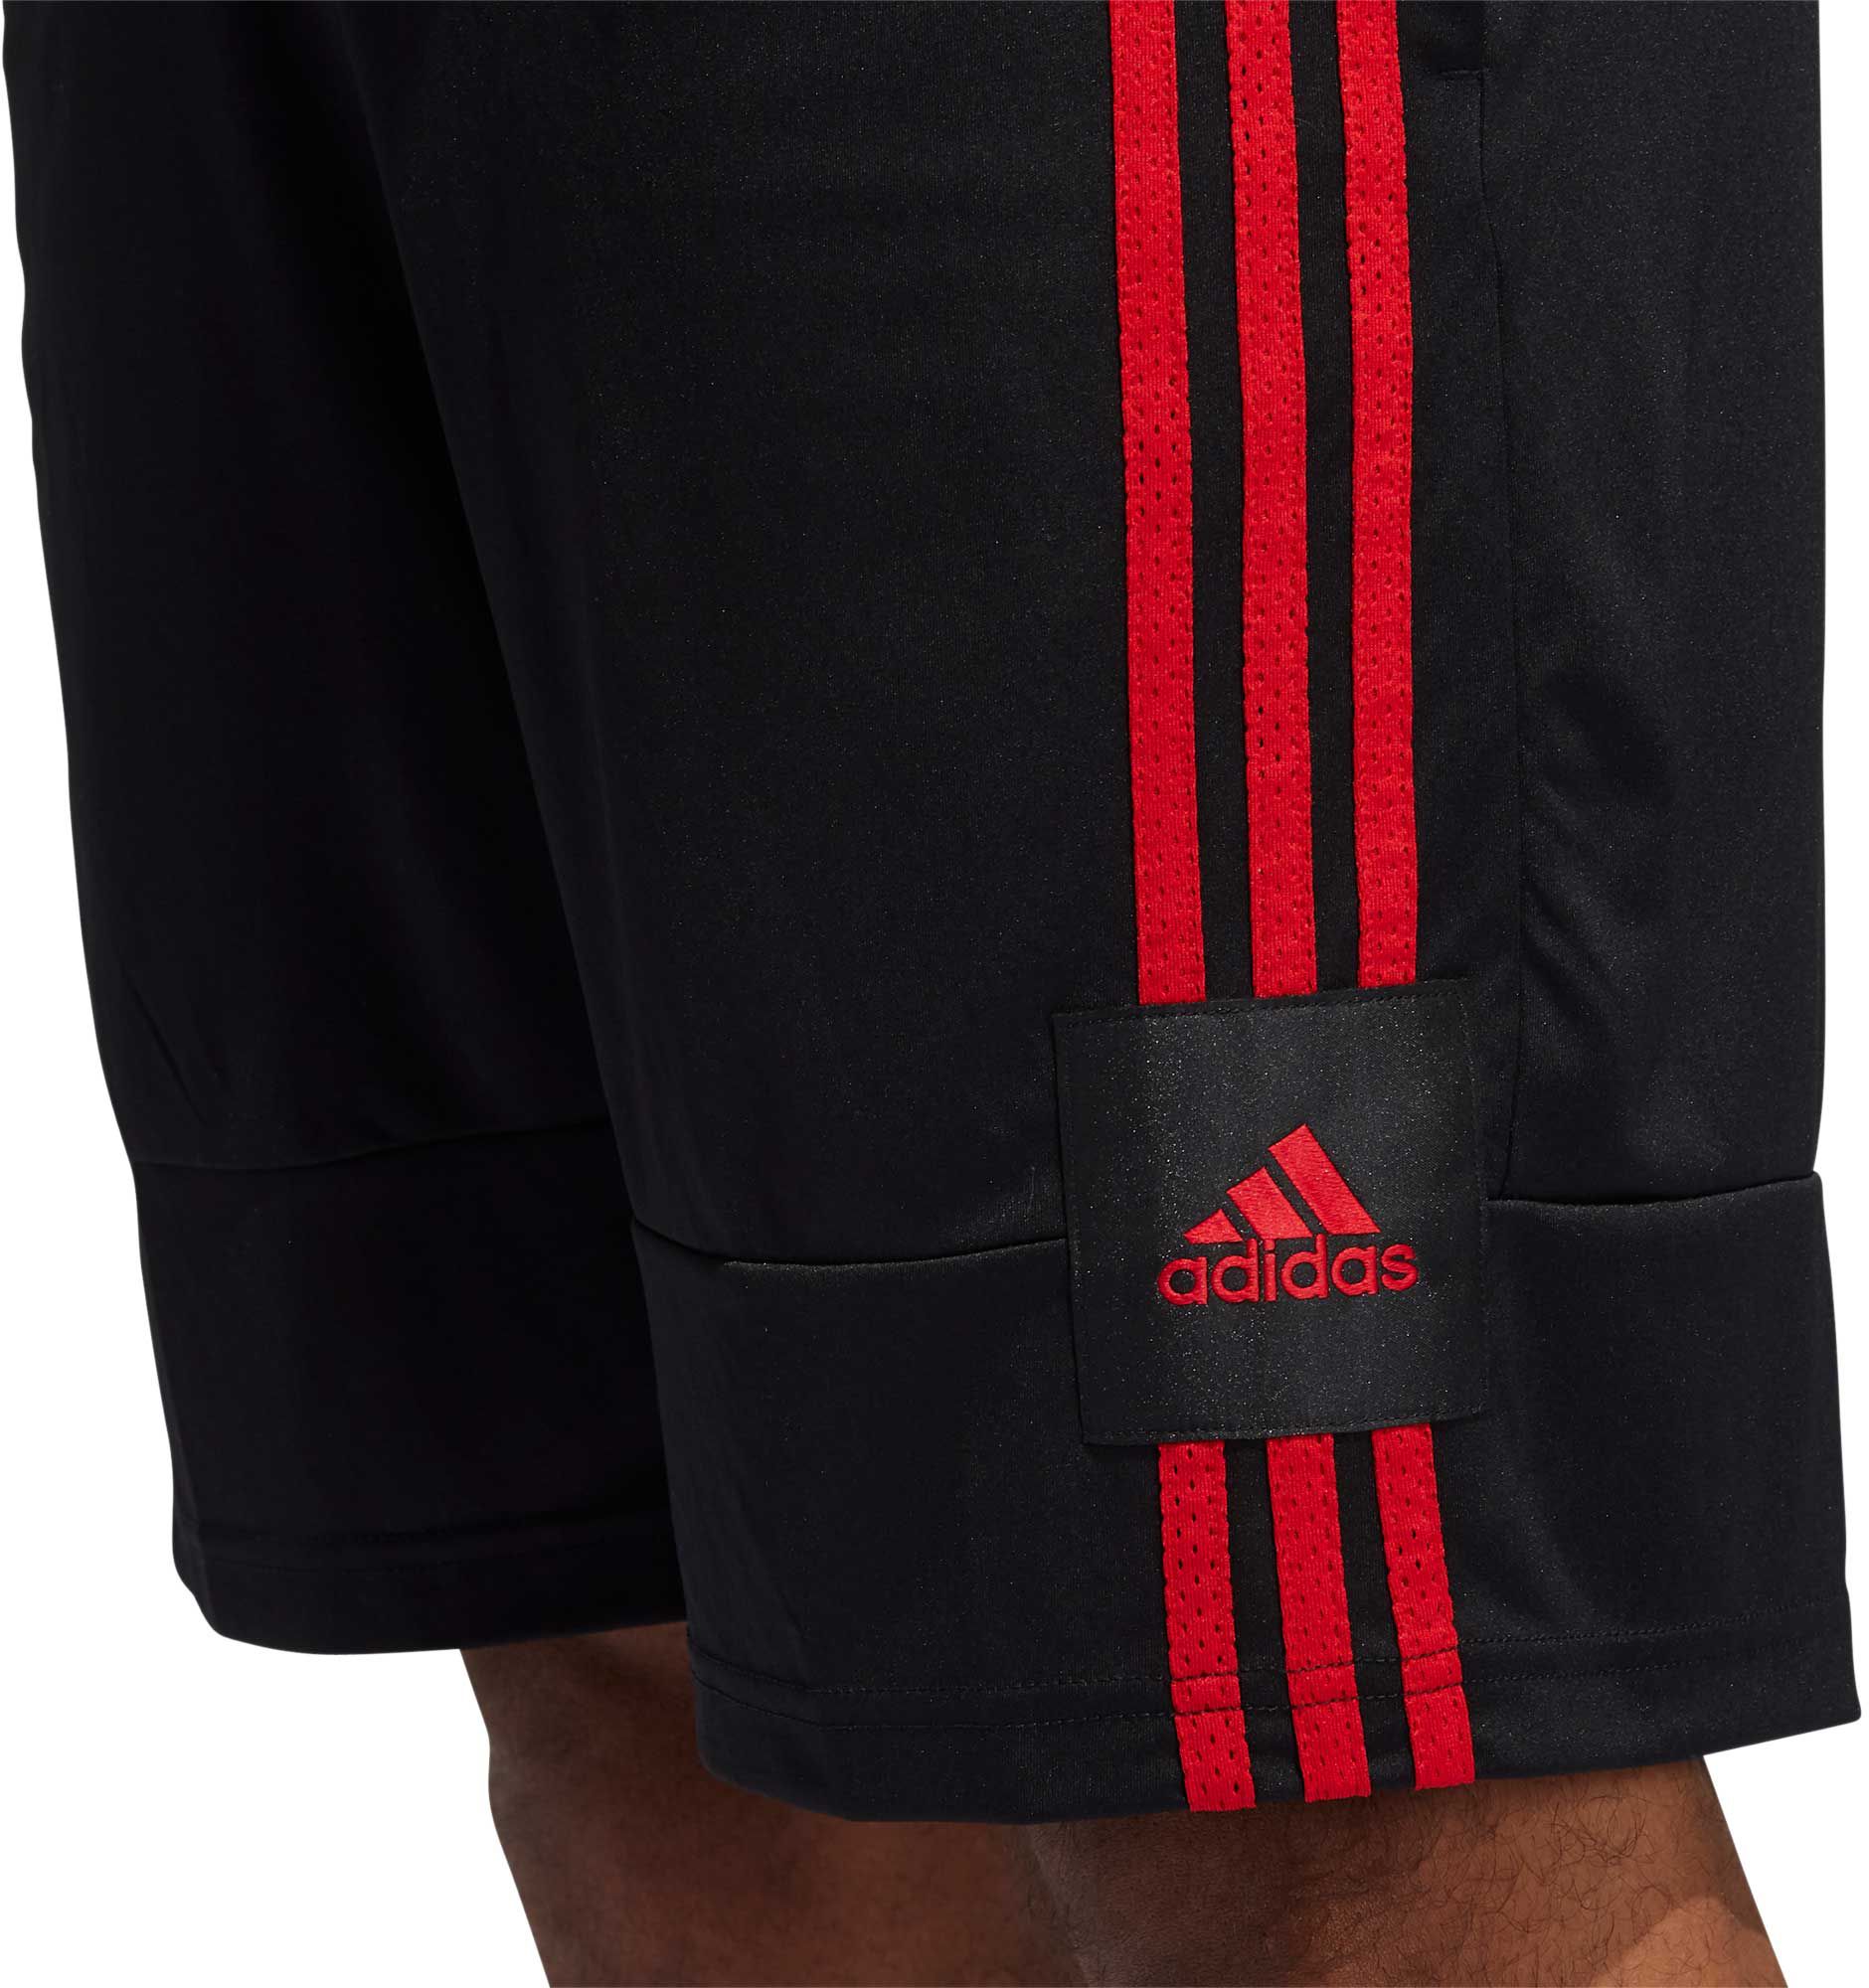 red and black adidas shorts